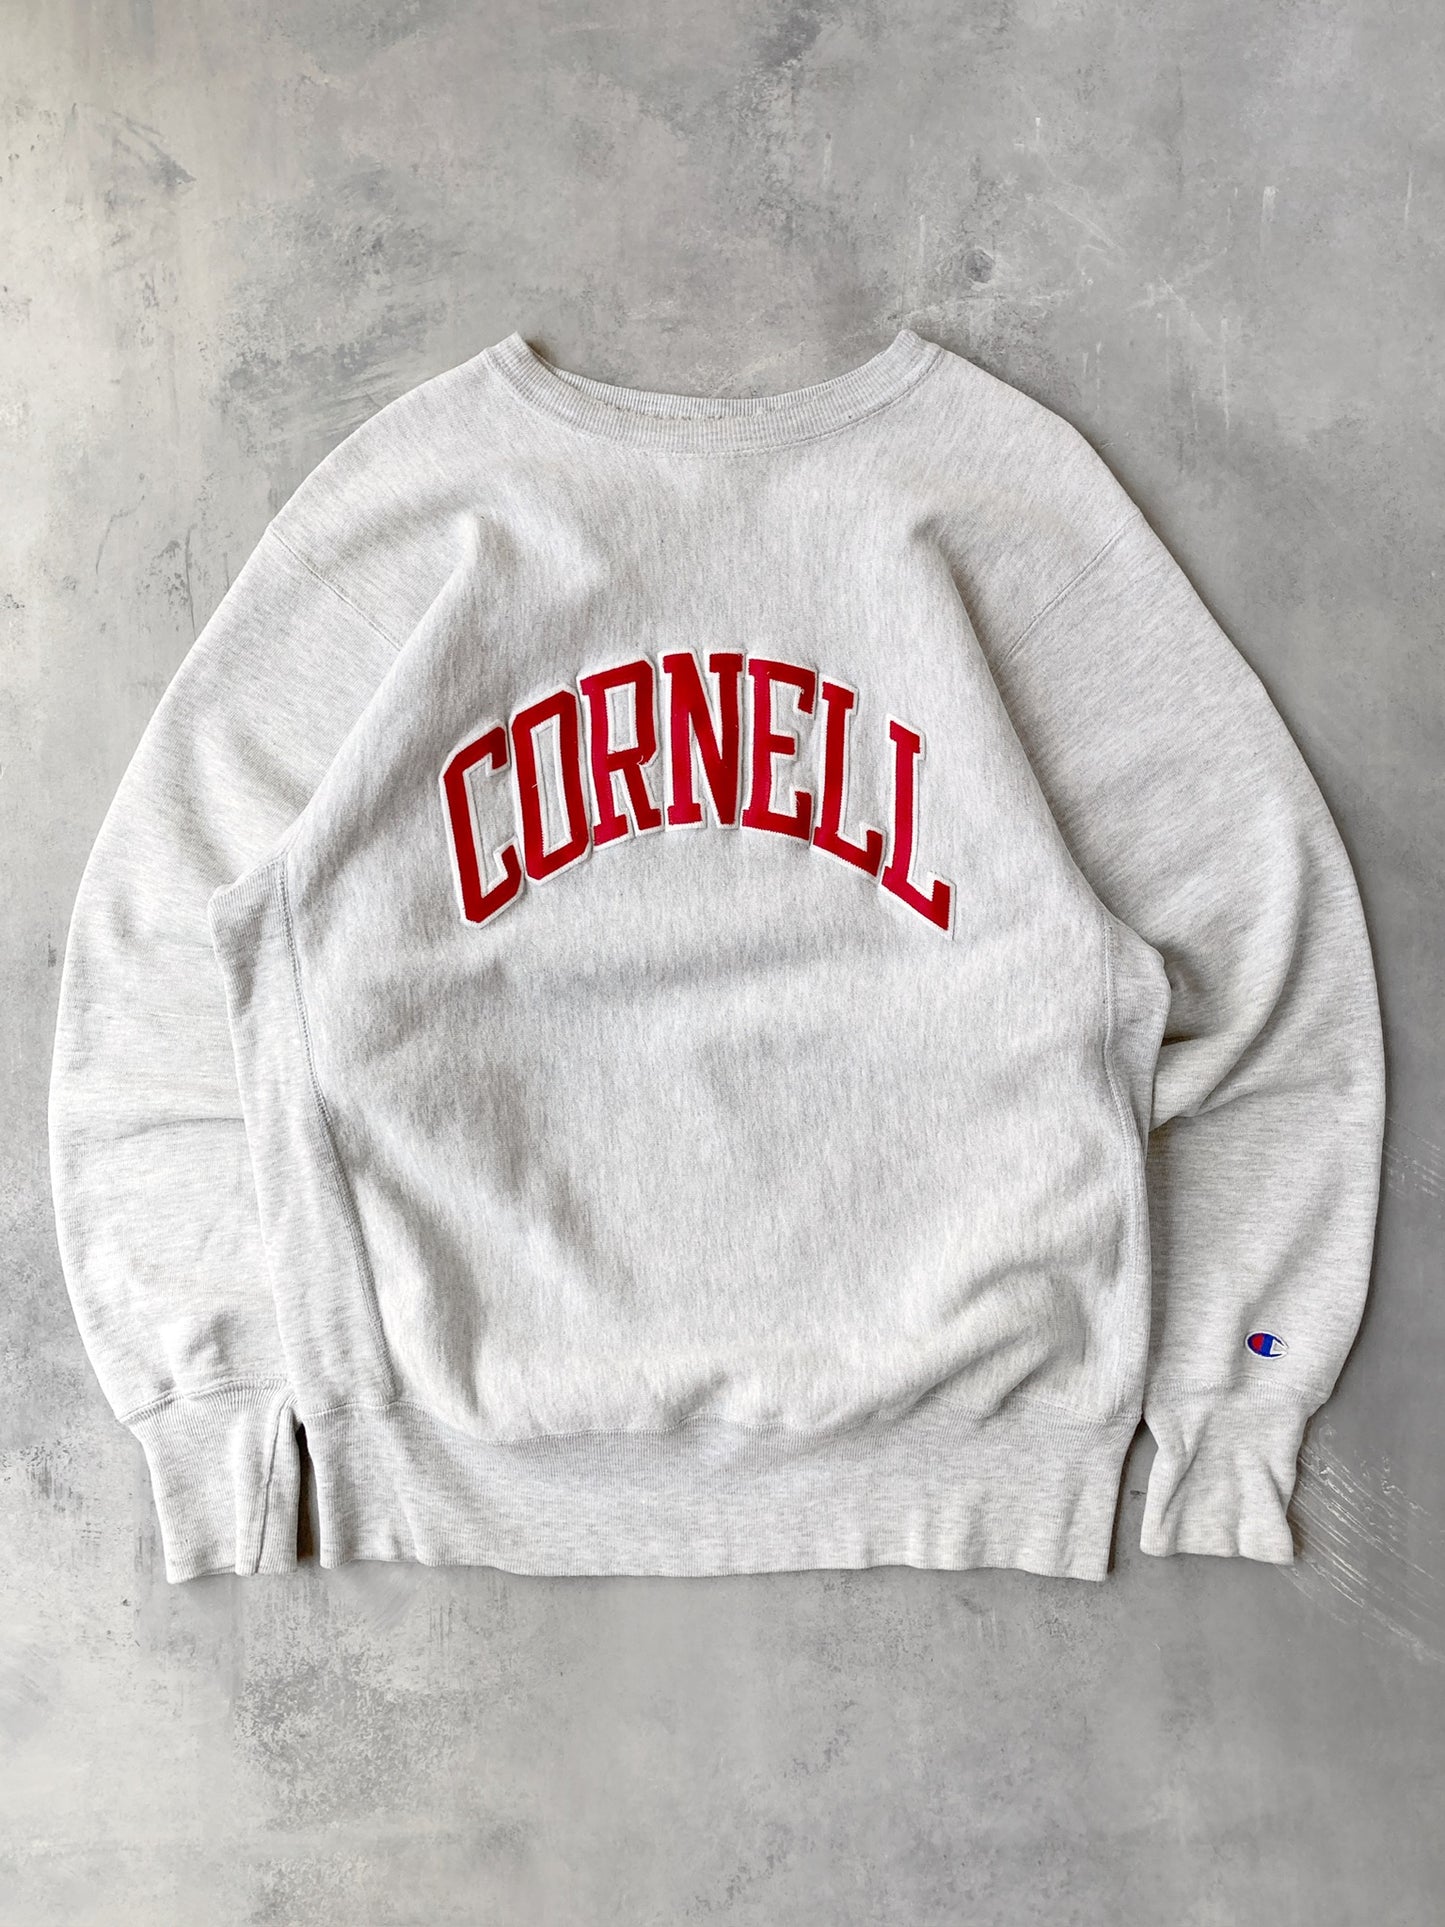 Cornell University Reverse Weave Sweatshirt 90's - XL